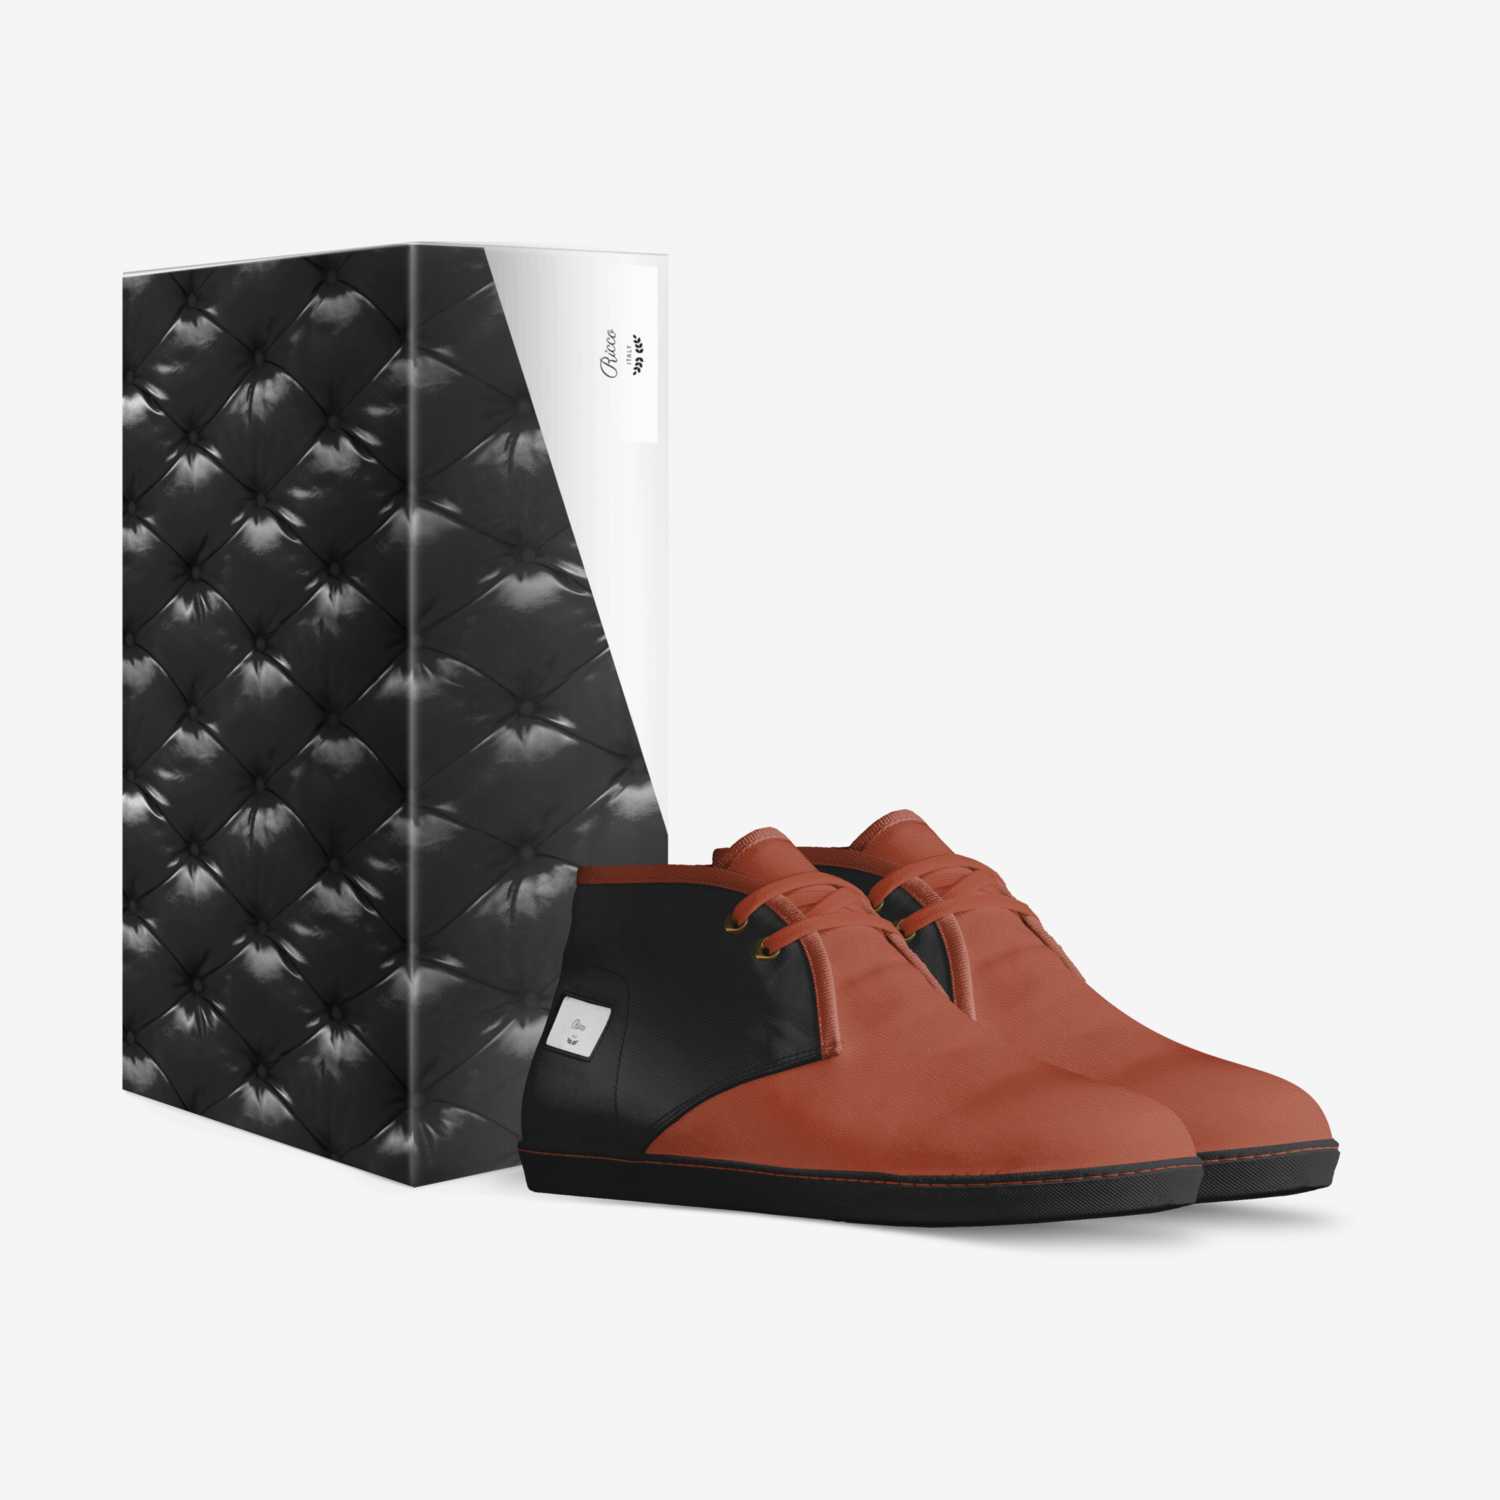 Ricco custom made in Italy shoes by Jack van Denburg | Box view